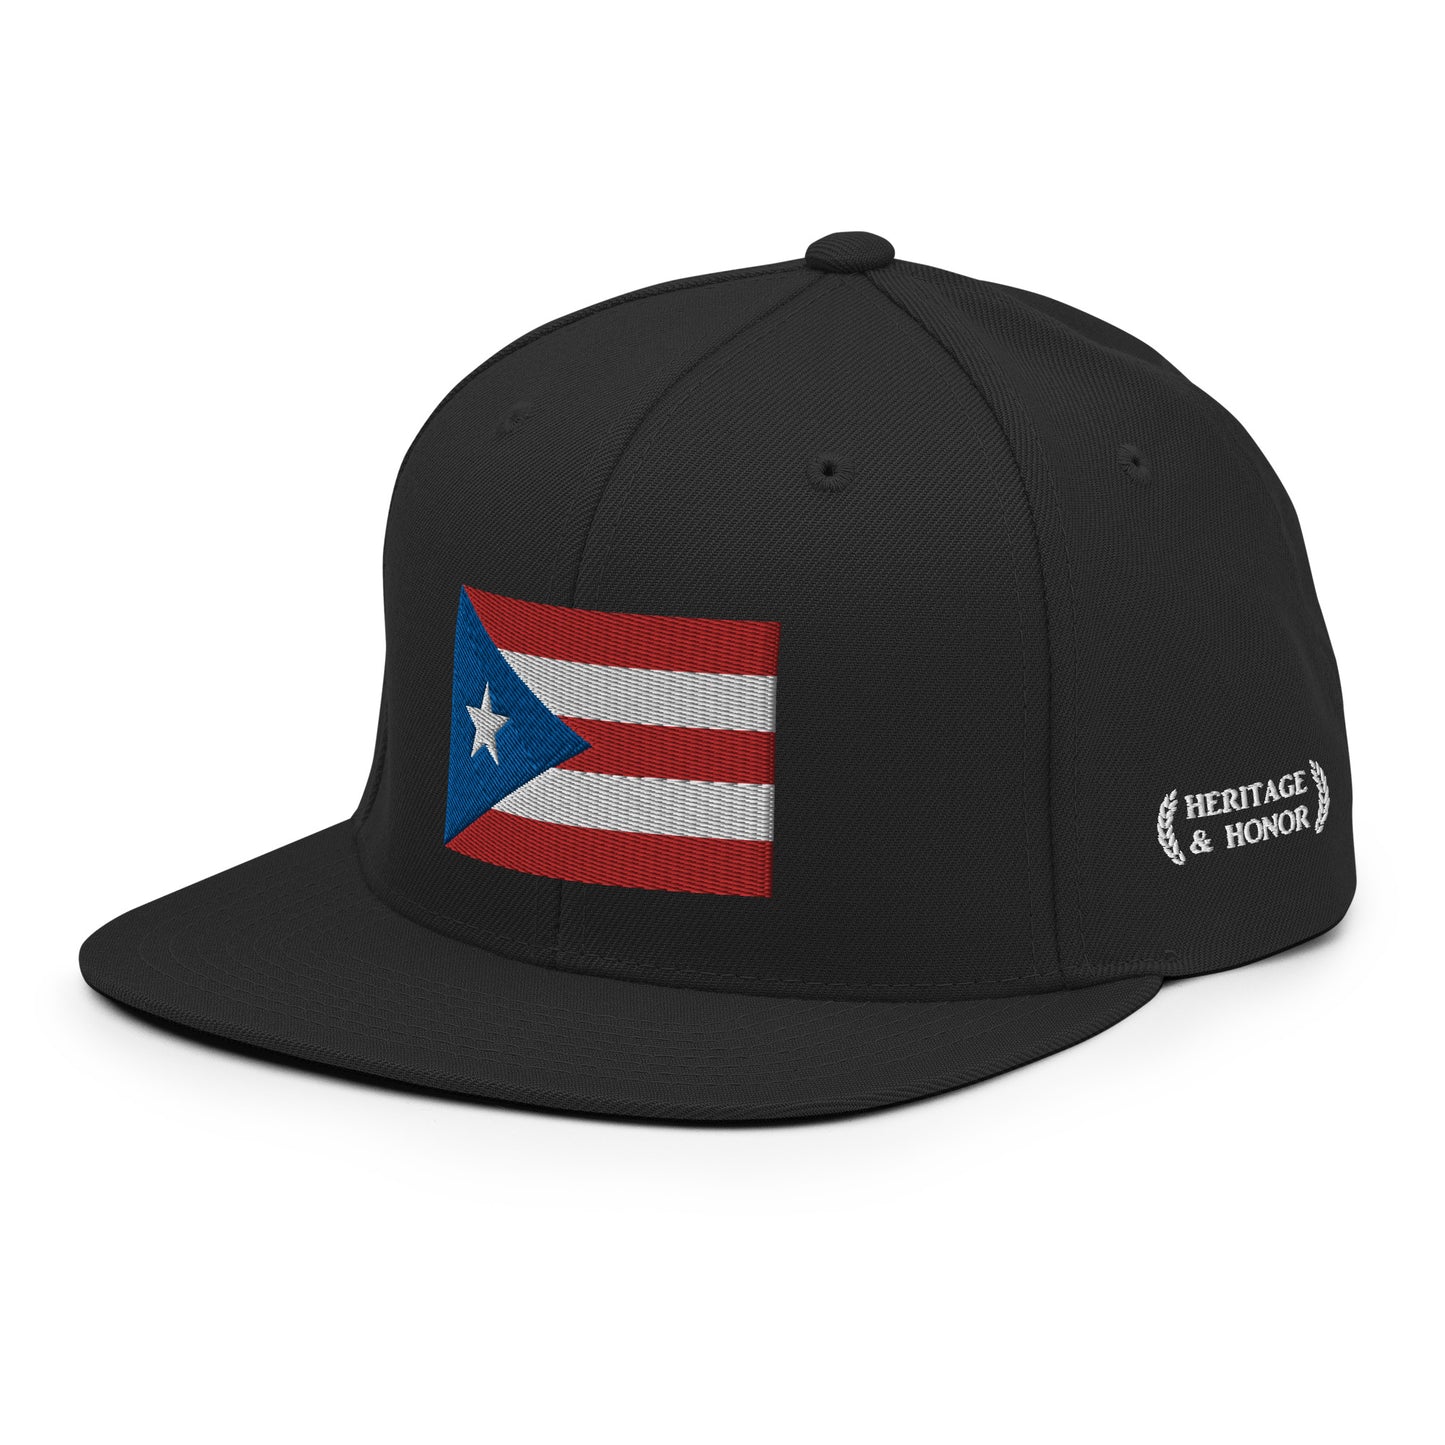 Heritage & Honor Snapback Cap 'Puerto Rico' 2